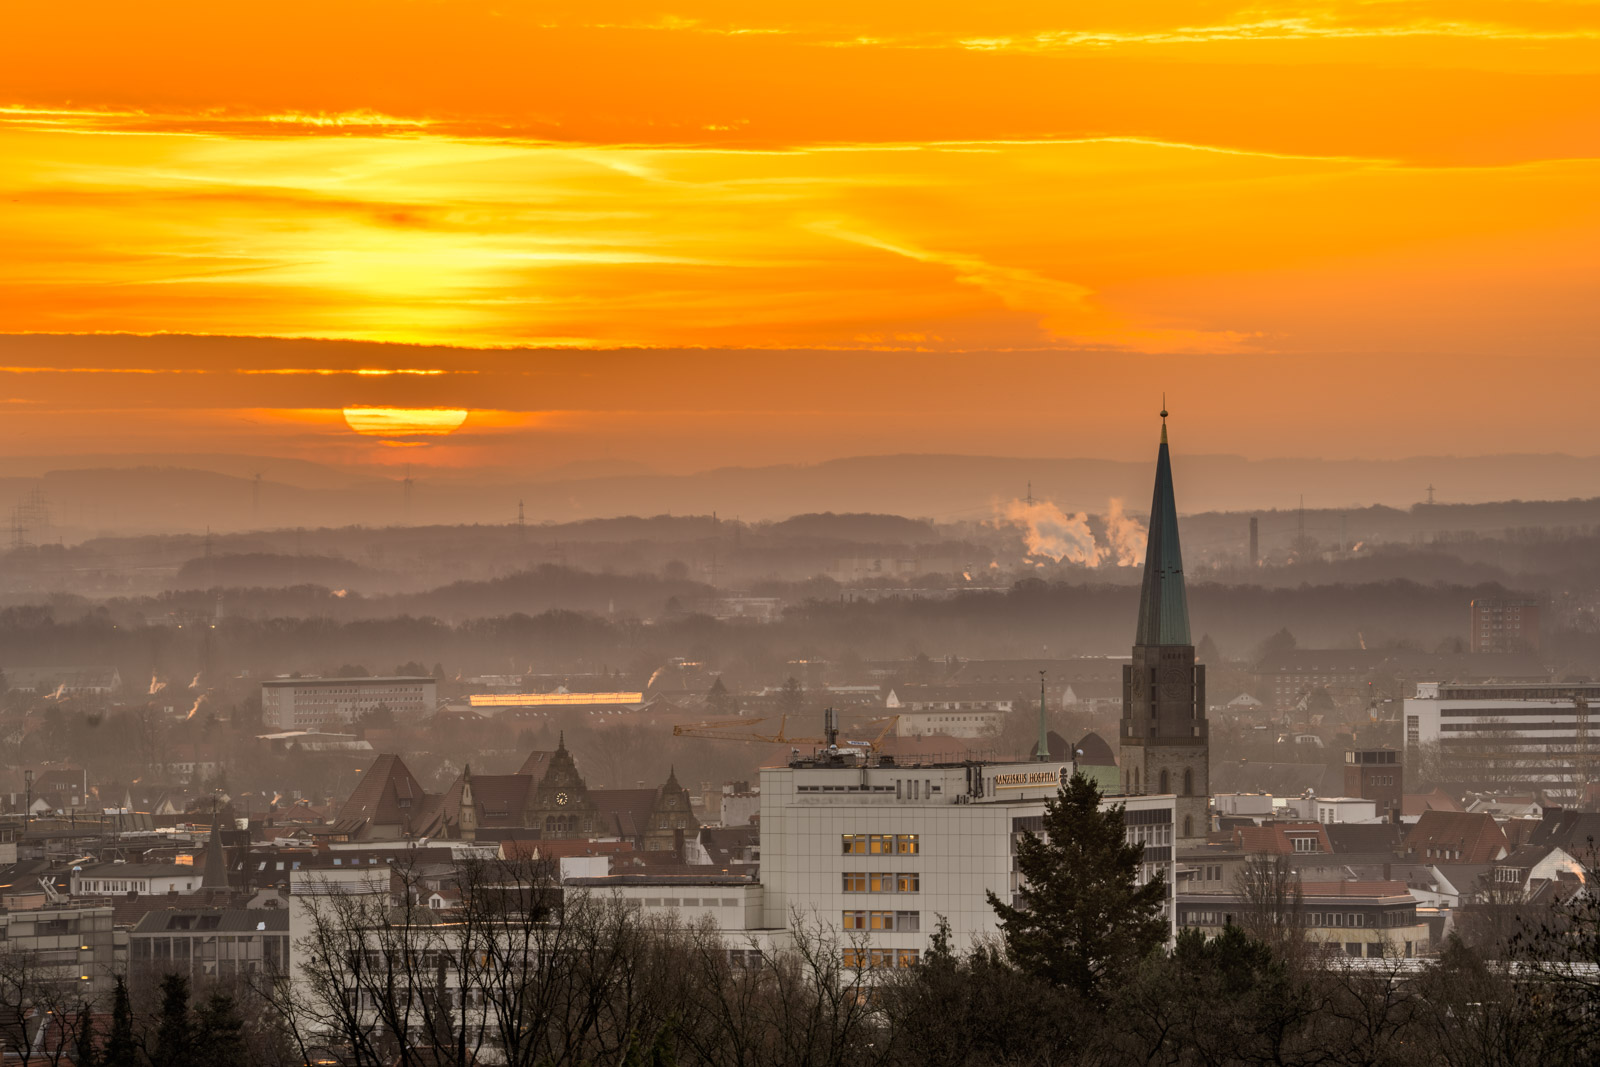 Sunrise over the city centre on 20 February 2021 (Bielefeld, Germany).